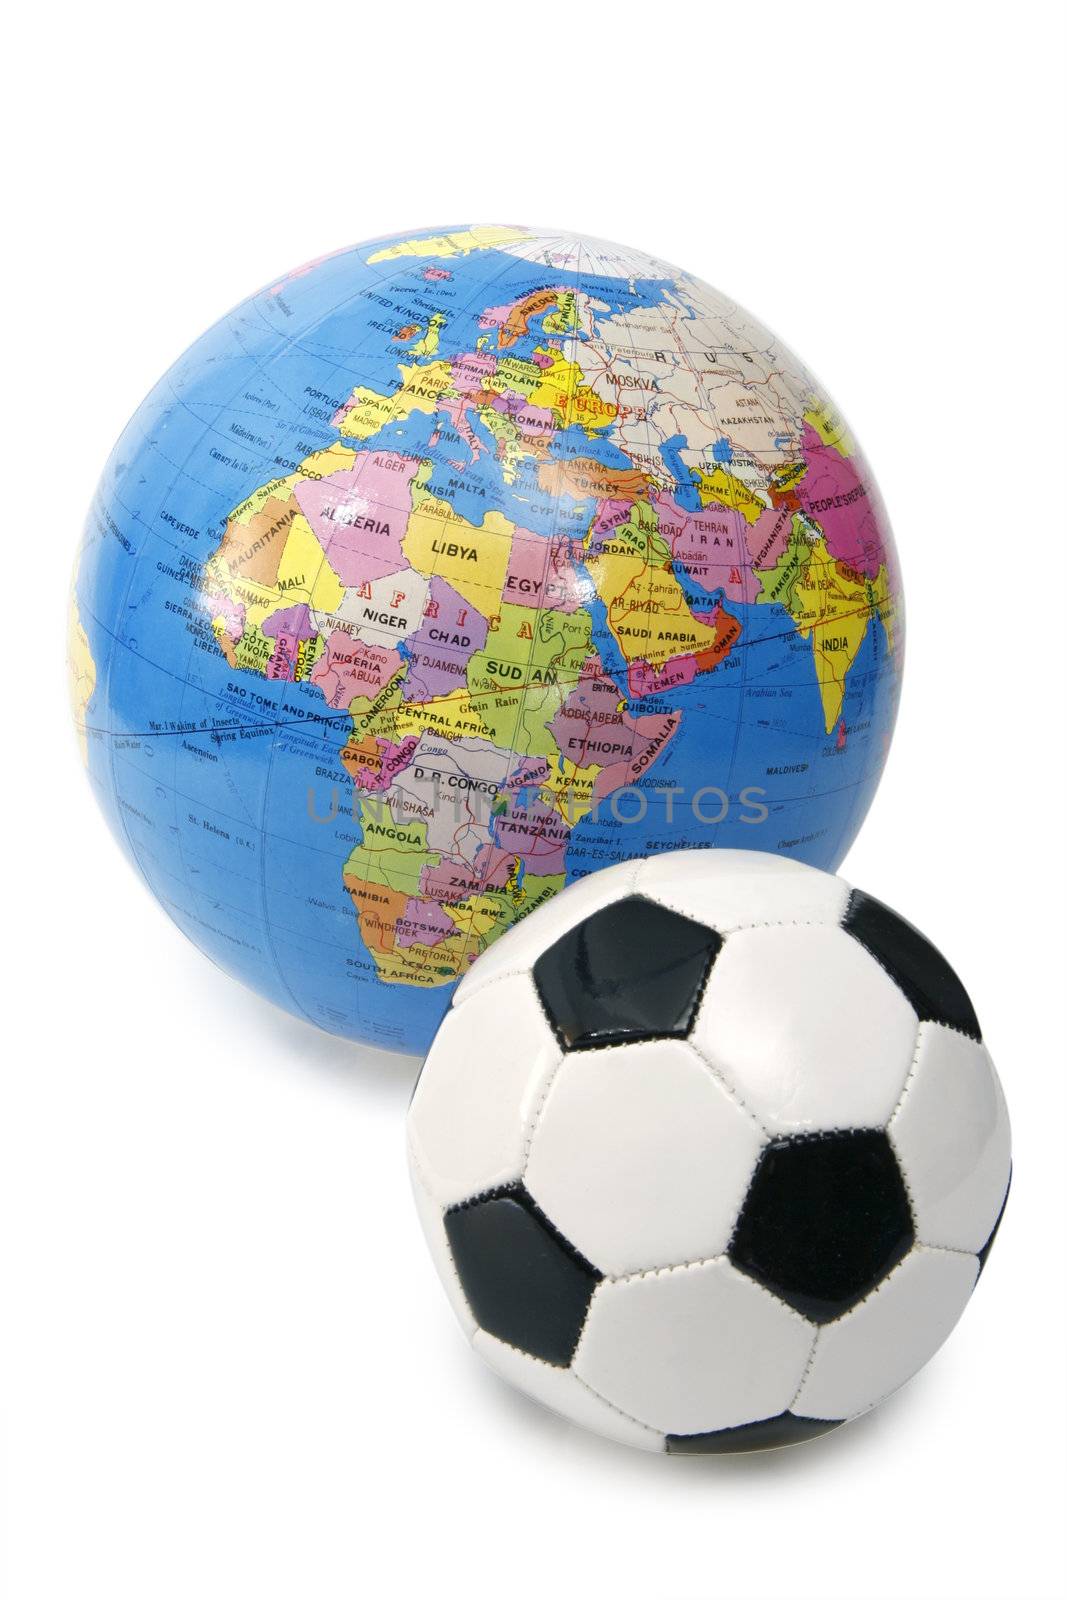 World of soccer by Teamarbeit